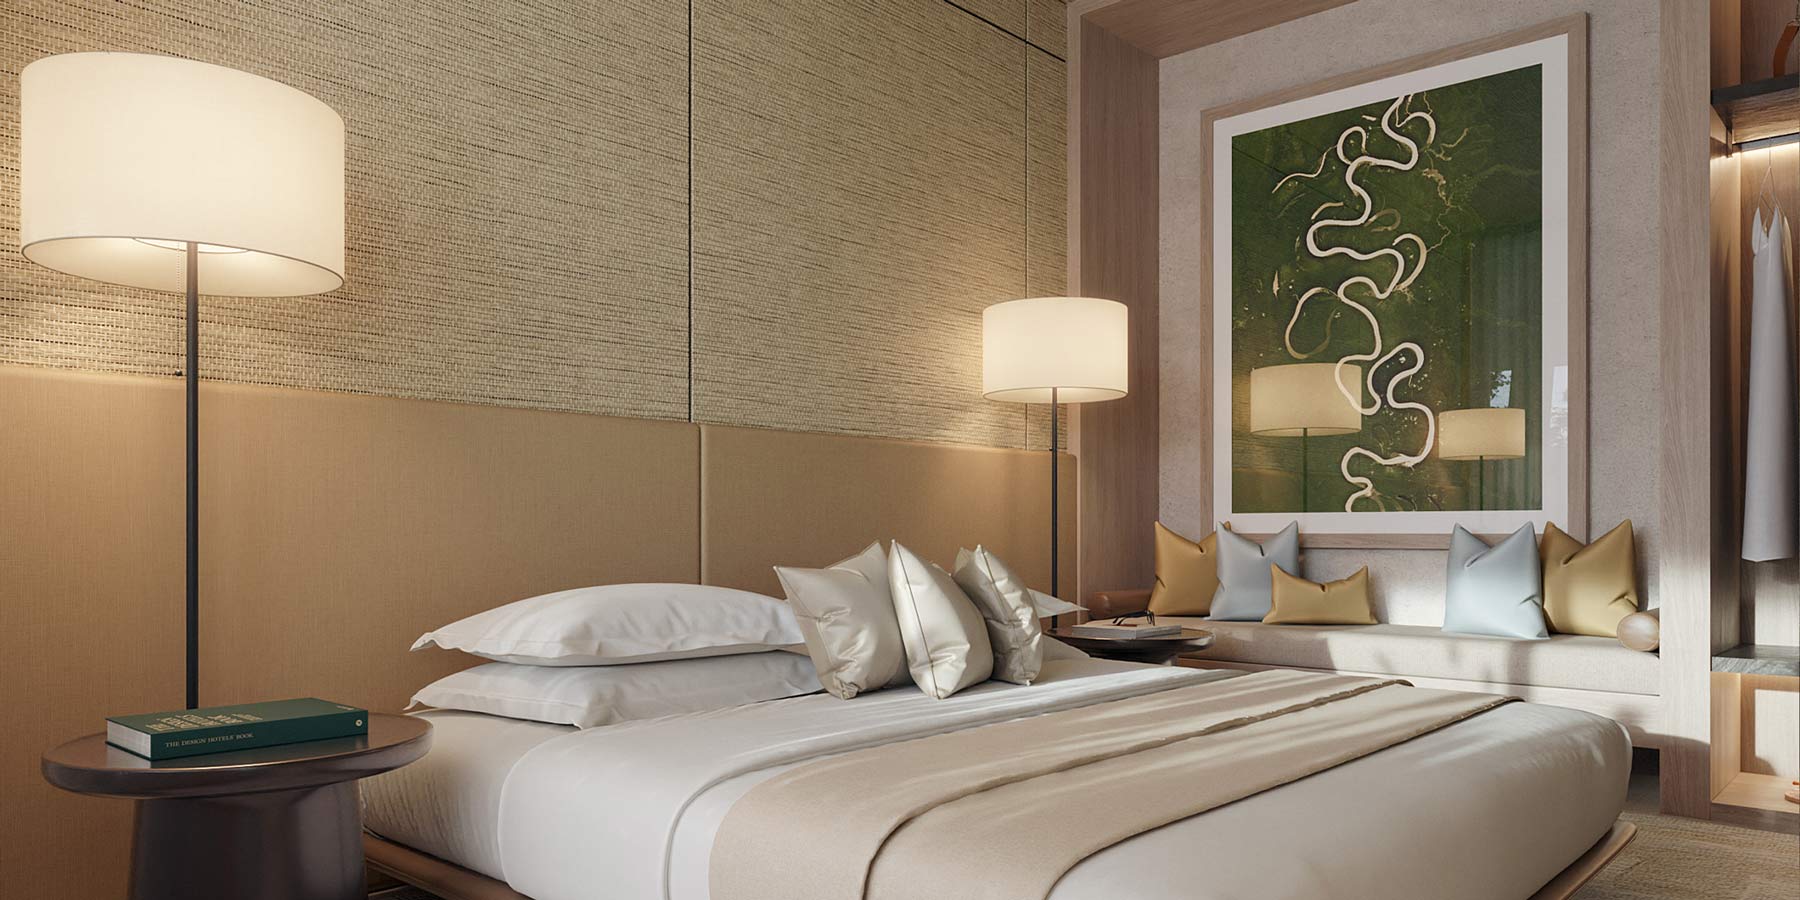 Eco resort Villa magna T1 bedroom door portugal